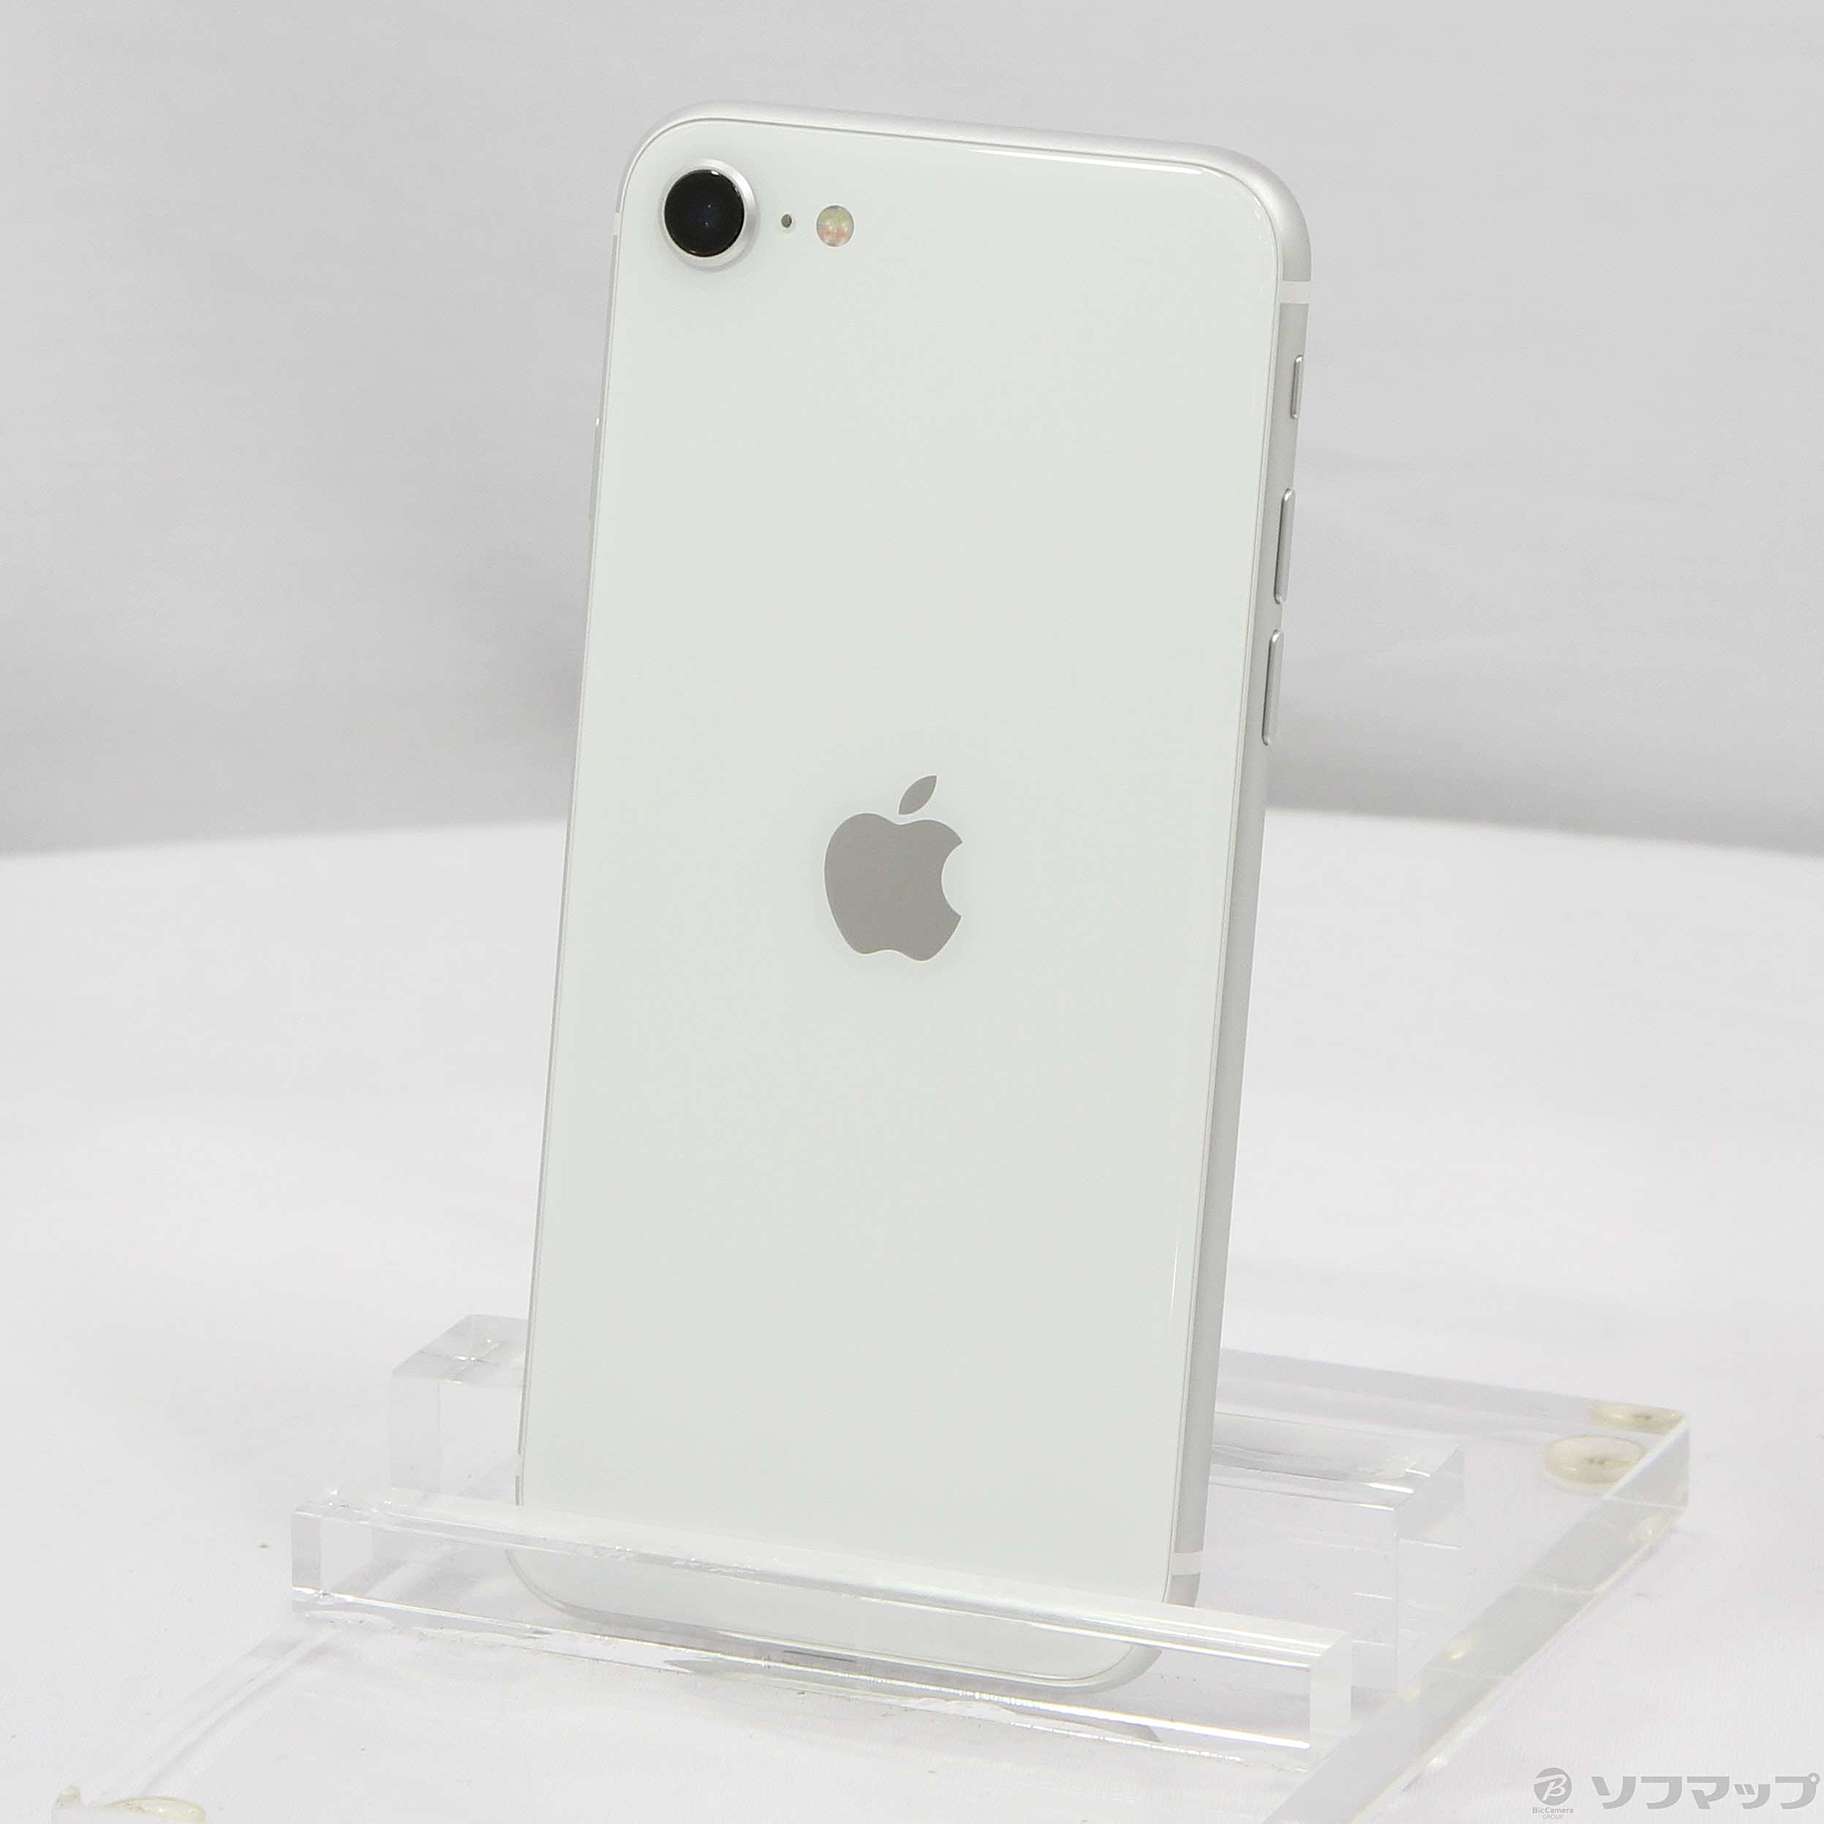 iPhone SE 第2世代 (SE2) ホワイト 64GB SIMフリー 新品指紋認証ApplePay